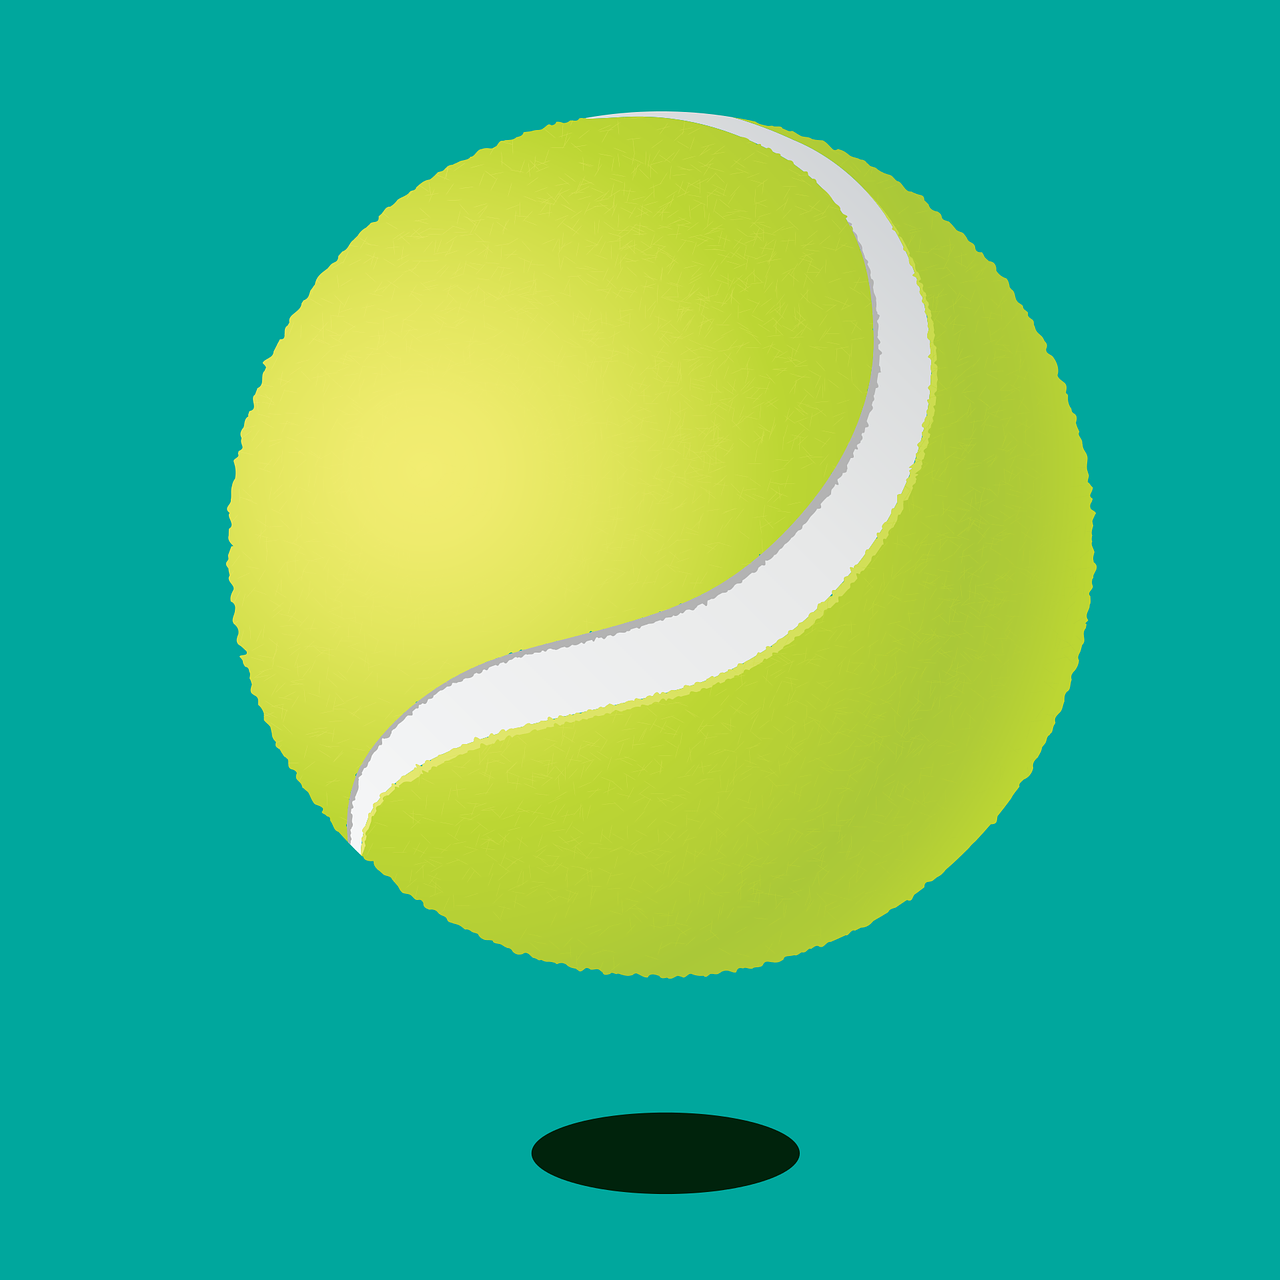 tennis ball game free photo